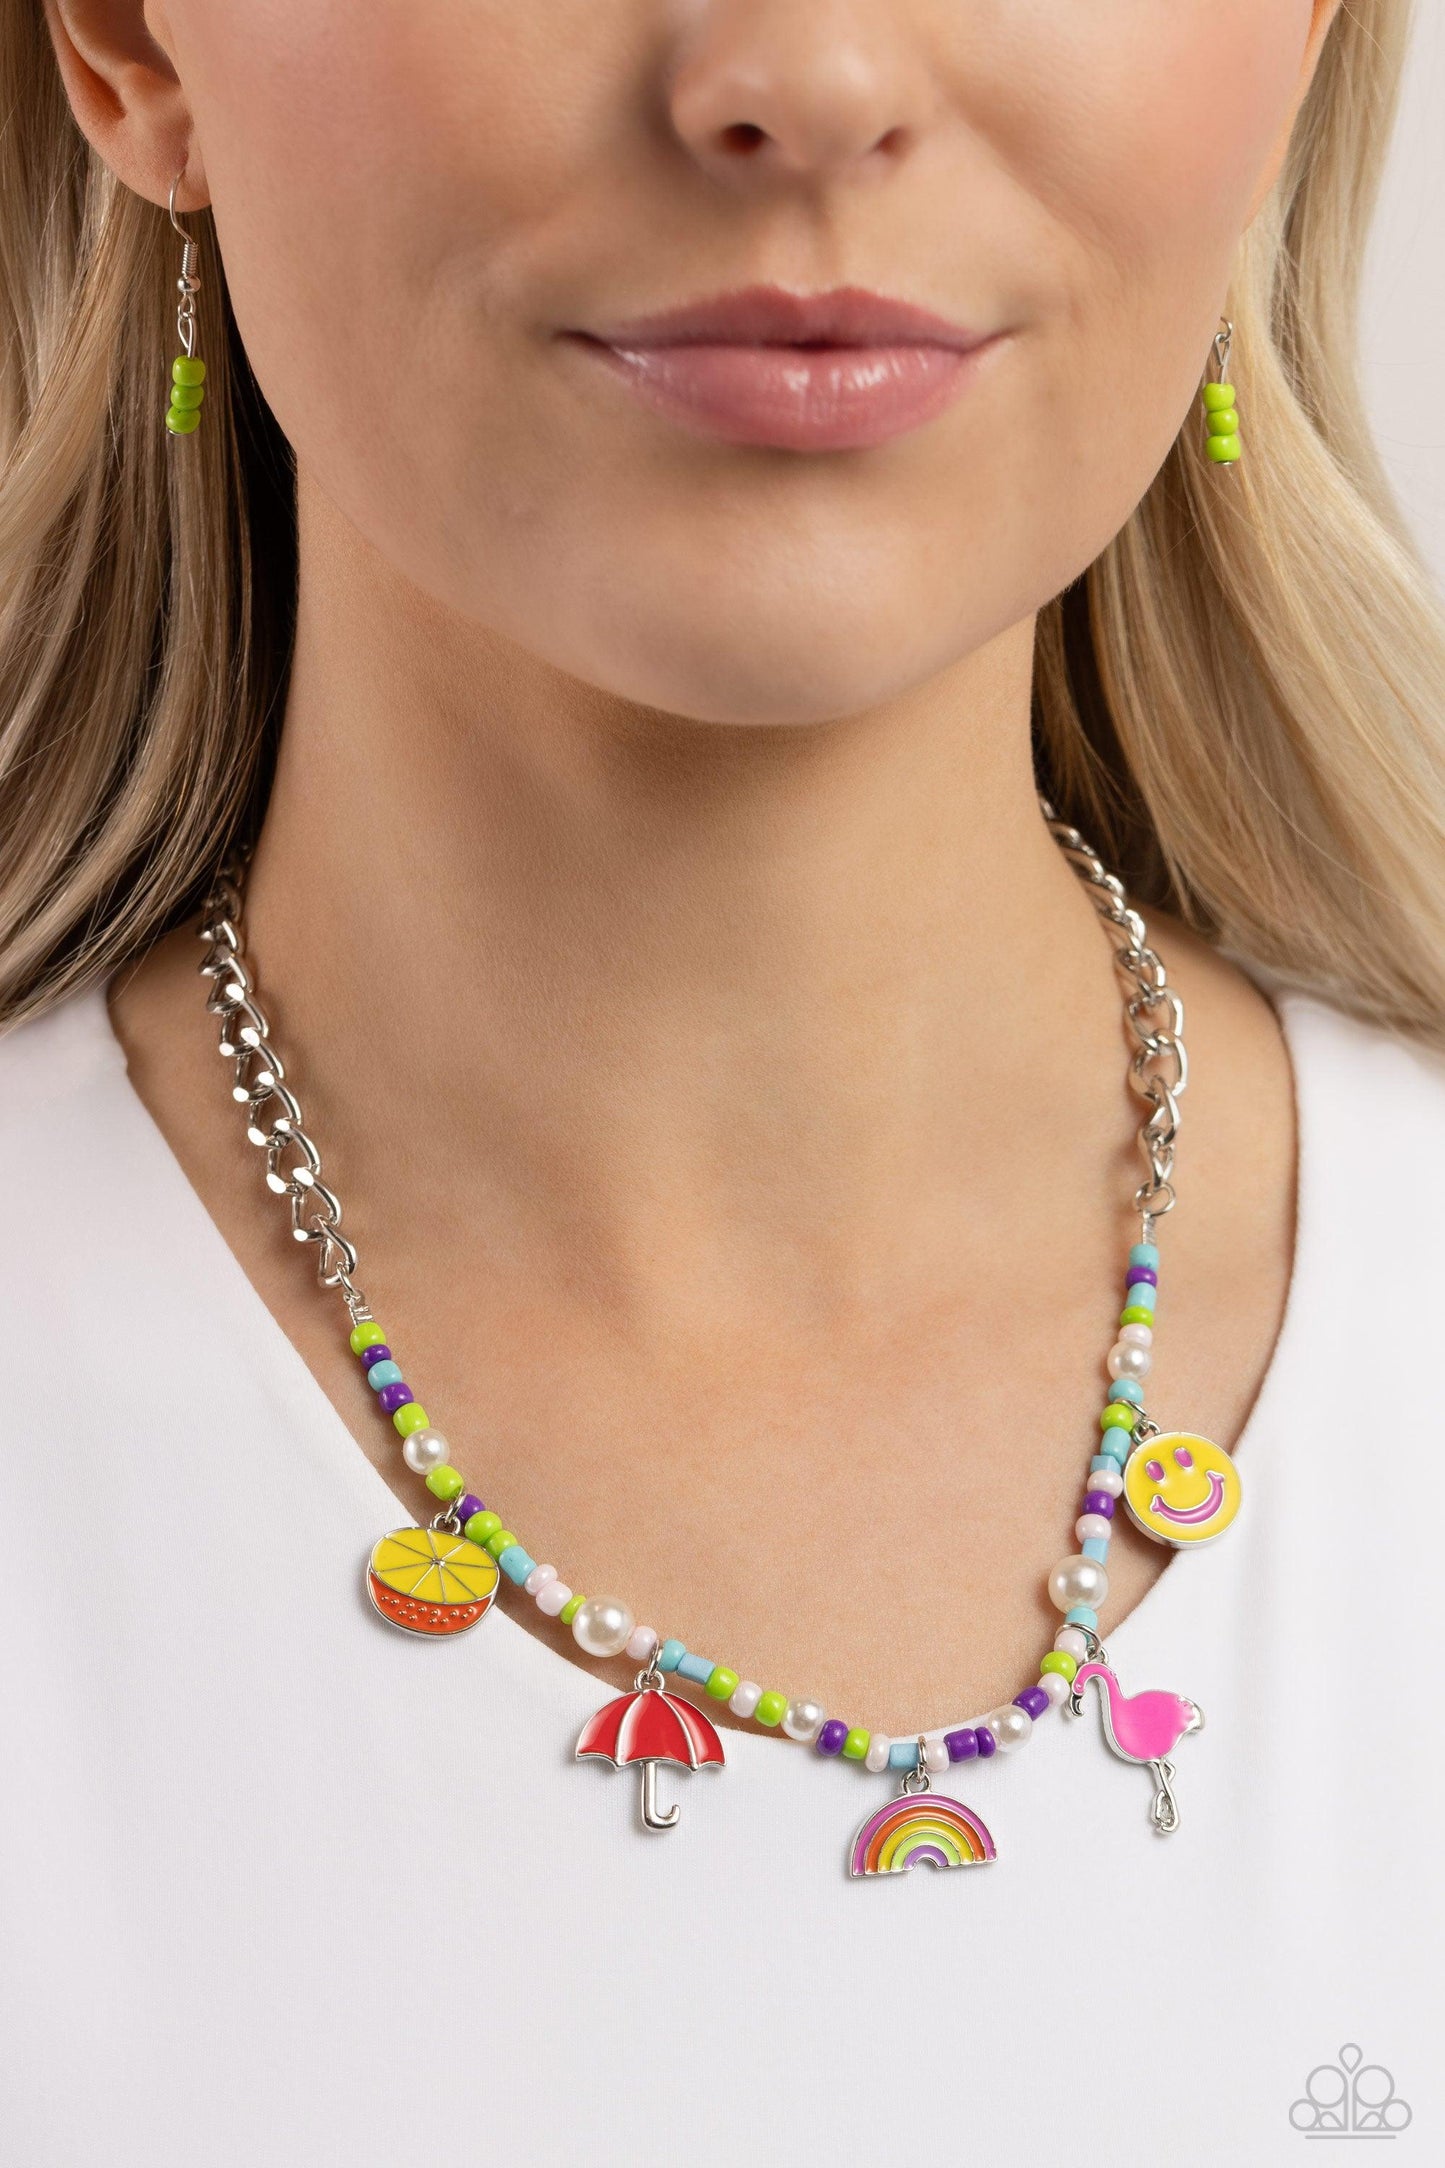 Paparazzi Accessories - Summer Sentiment - Multicolor Necklace - Bling by JessieK